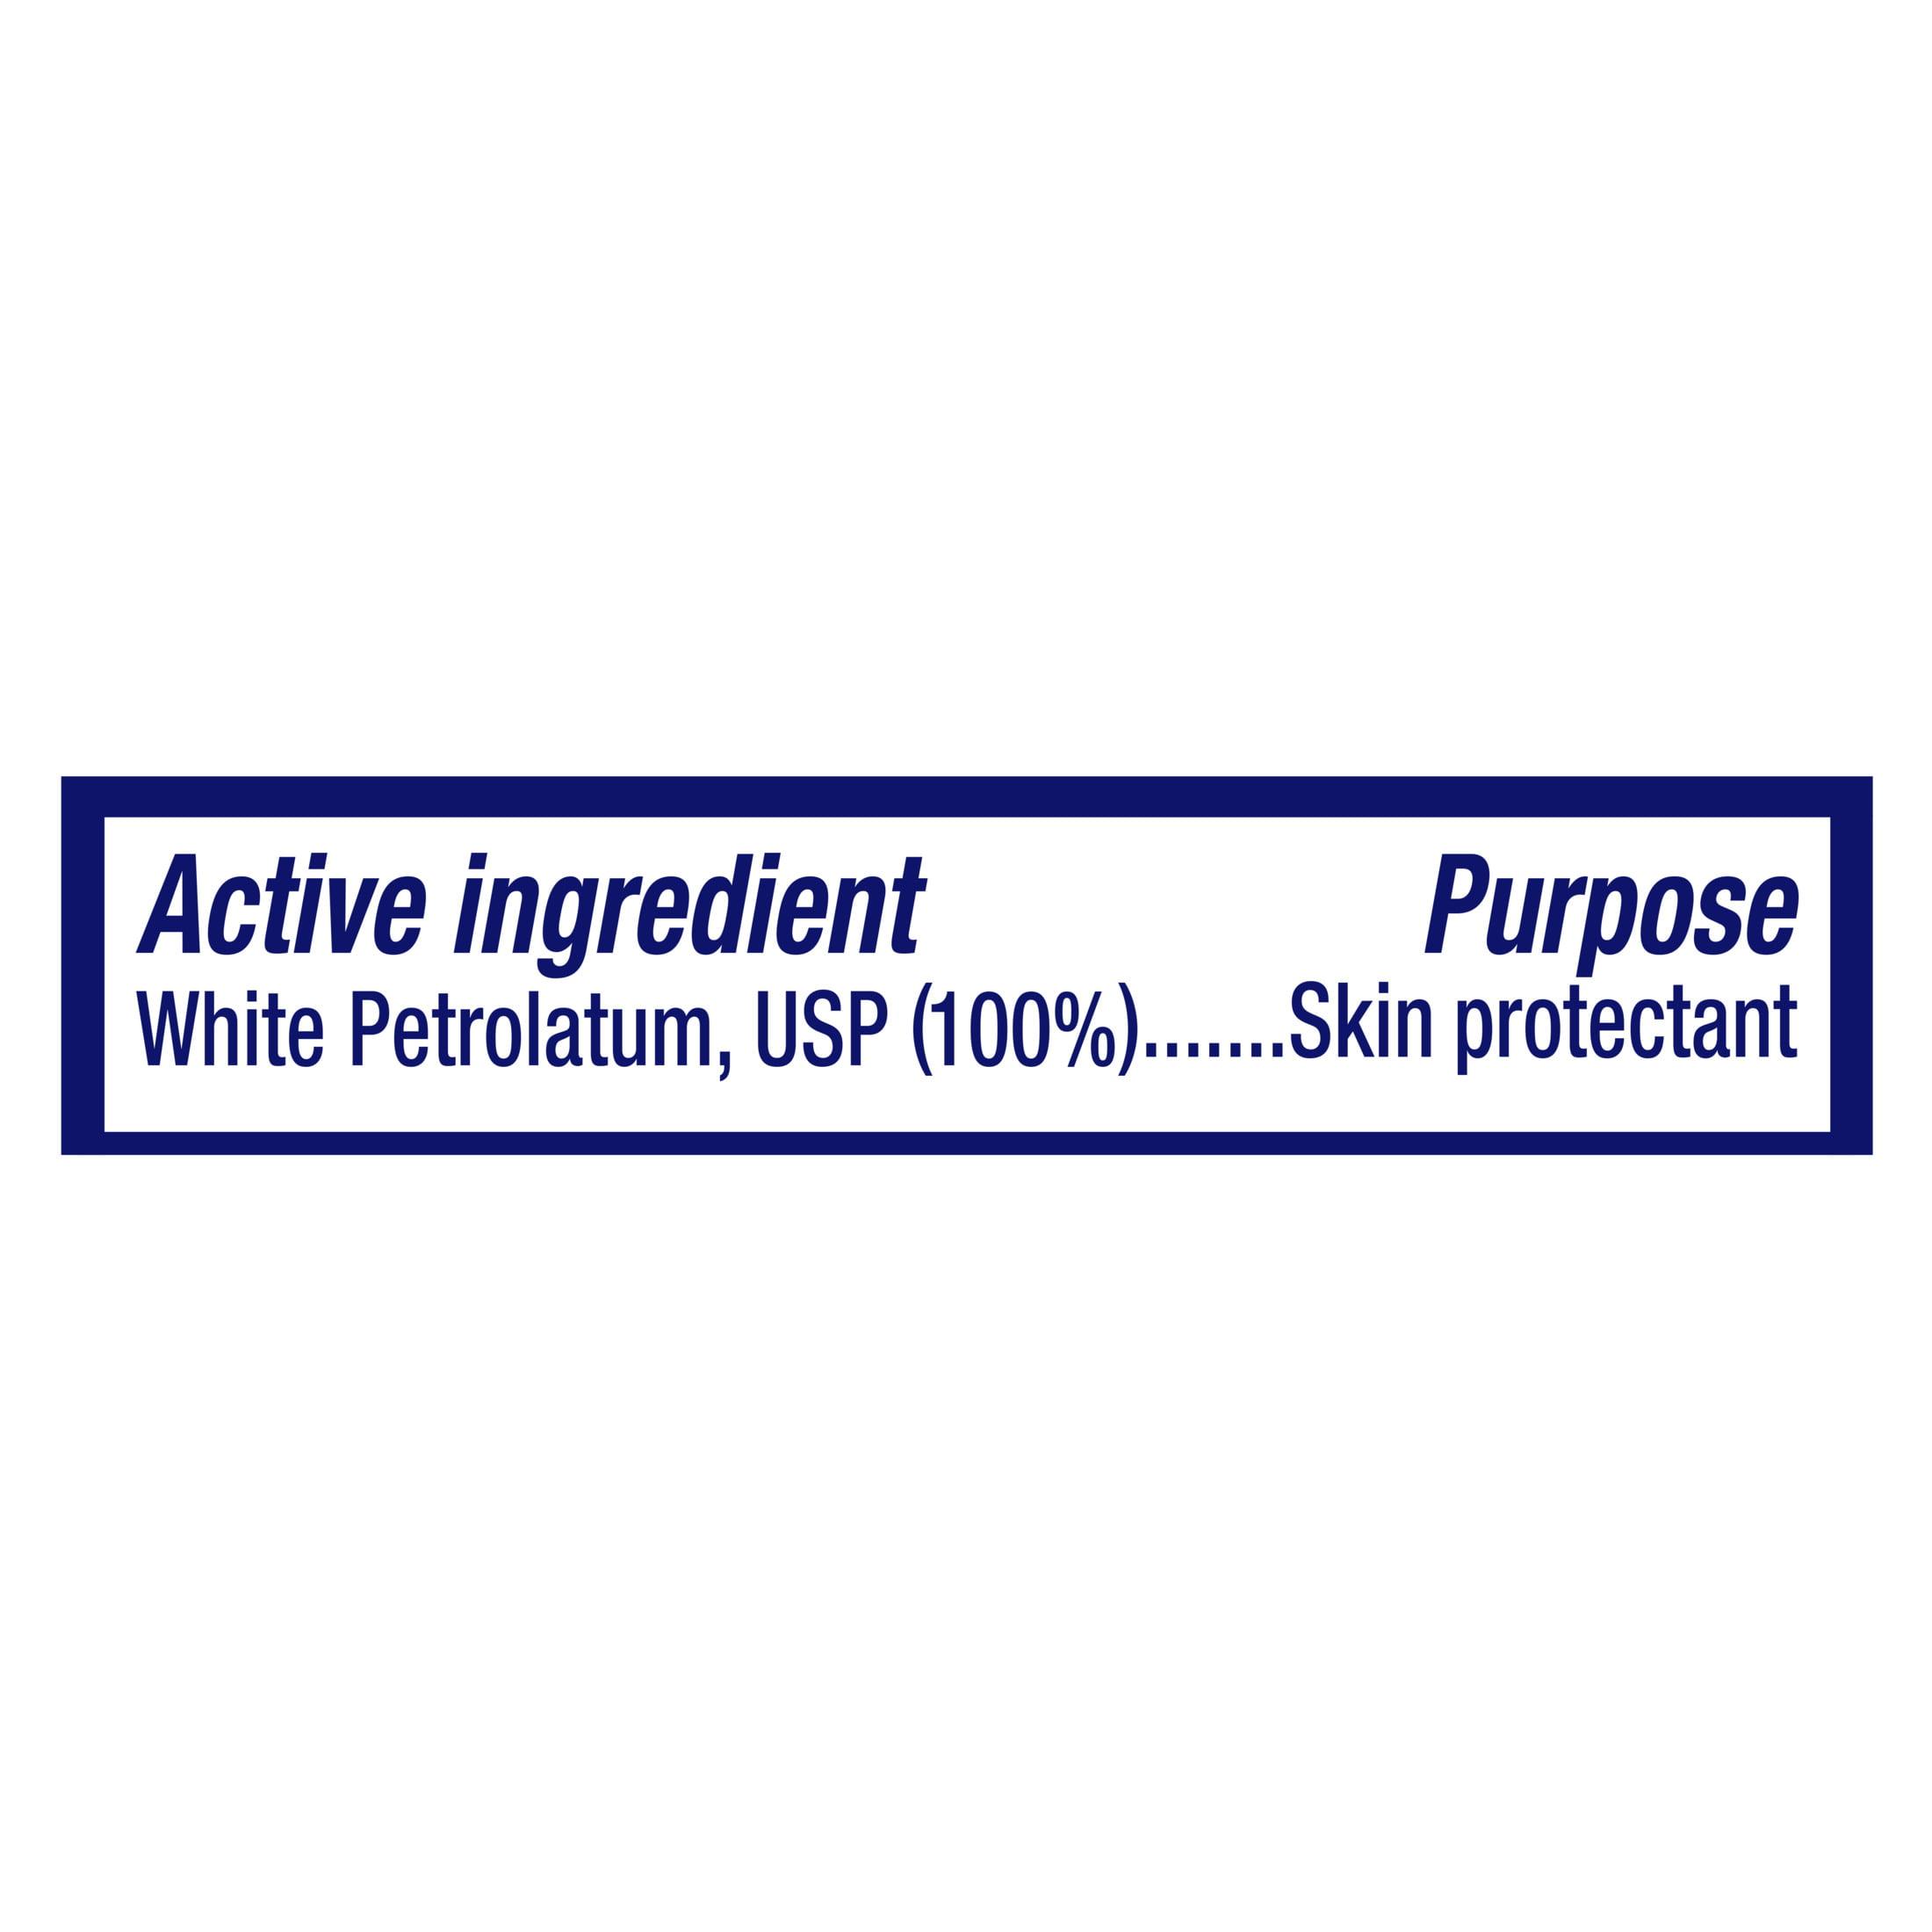 Vaseline Original Lock In Moisture Body Oil Pure Healing Petroleum Jelly All Skin, 13 oz - image 5 of 7